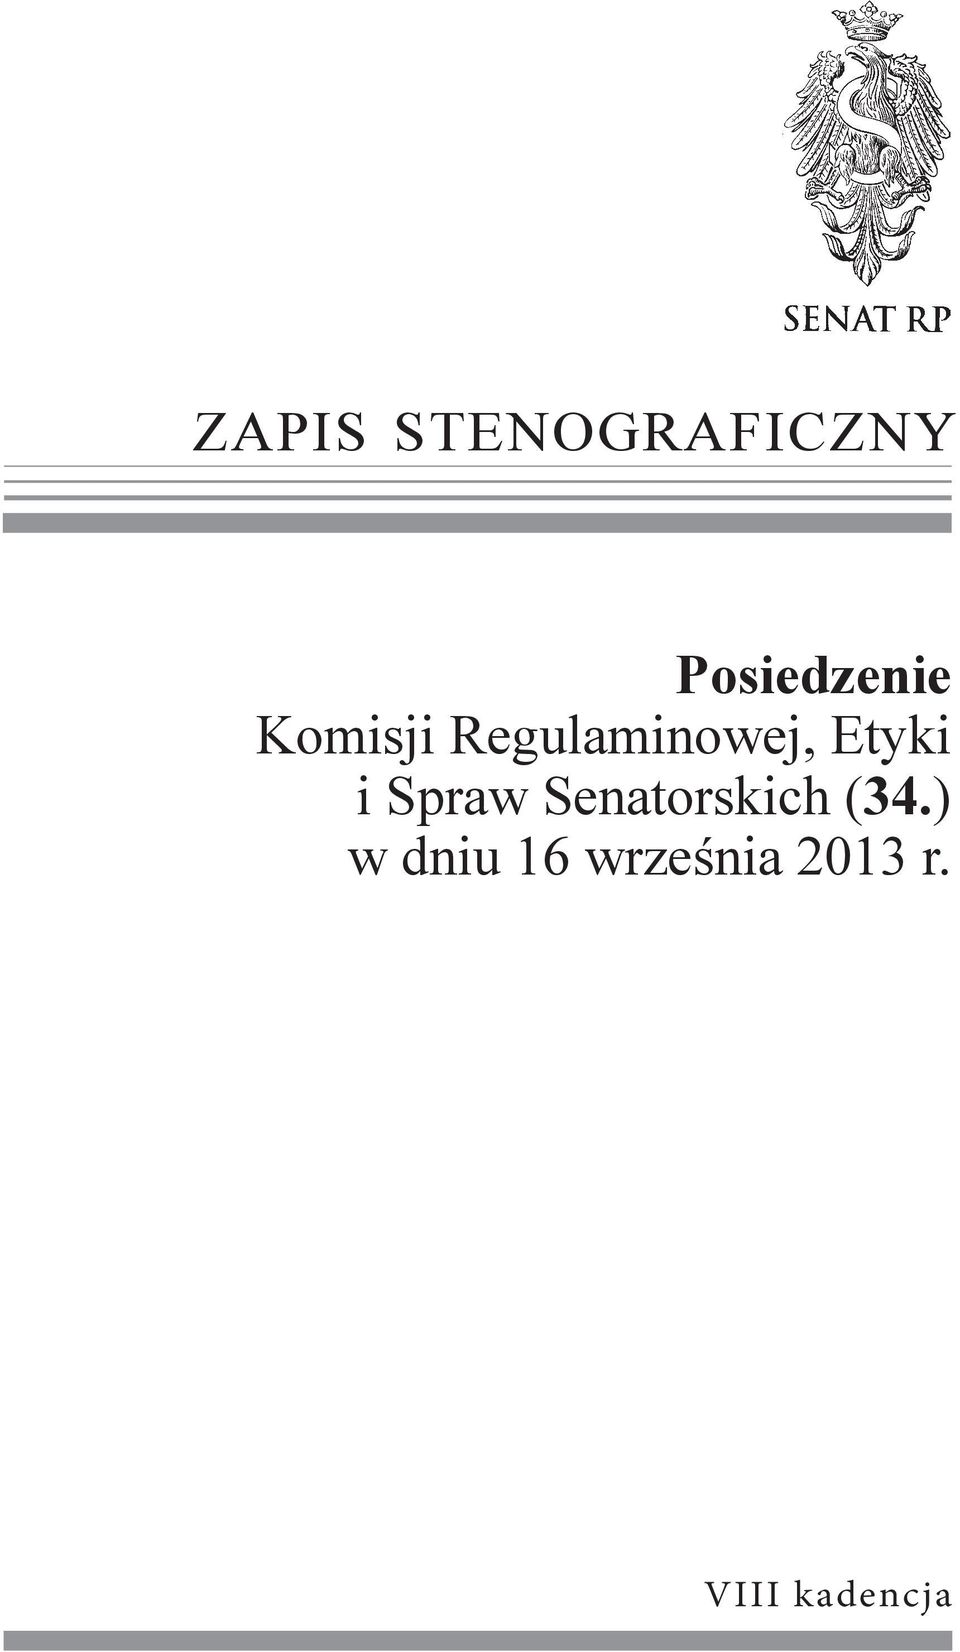 Spraw Senatorskich (34.